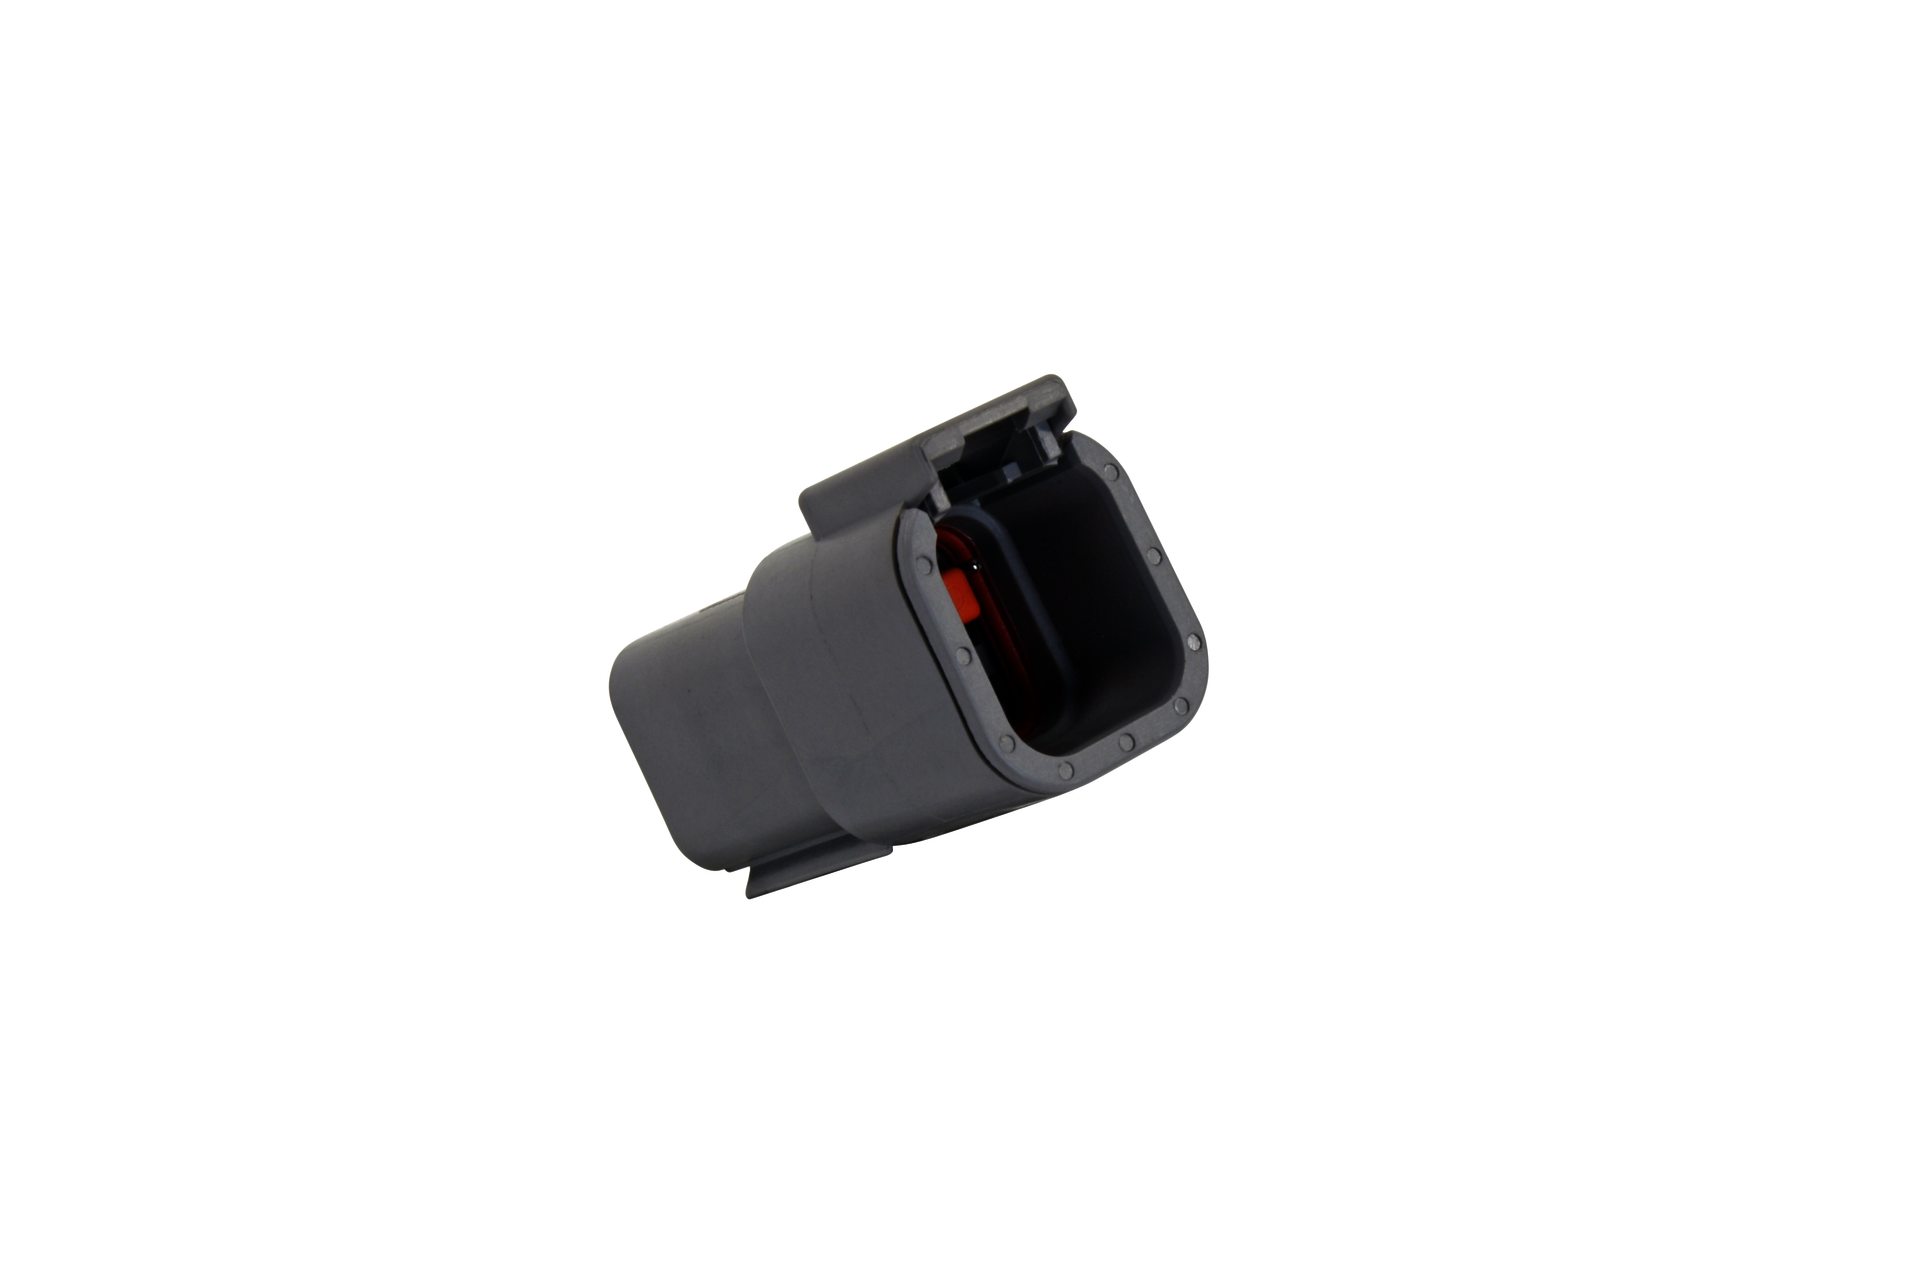 AEM Infinity Coil Adapter for use with Distributed Honda/Acura - Klik om te sluiten